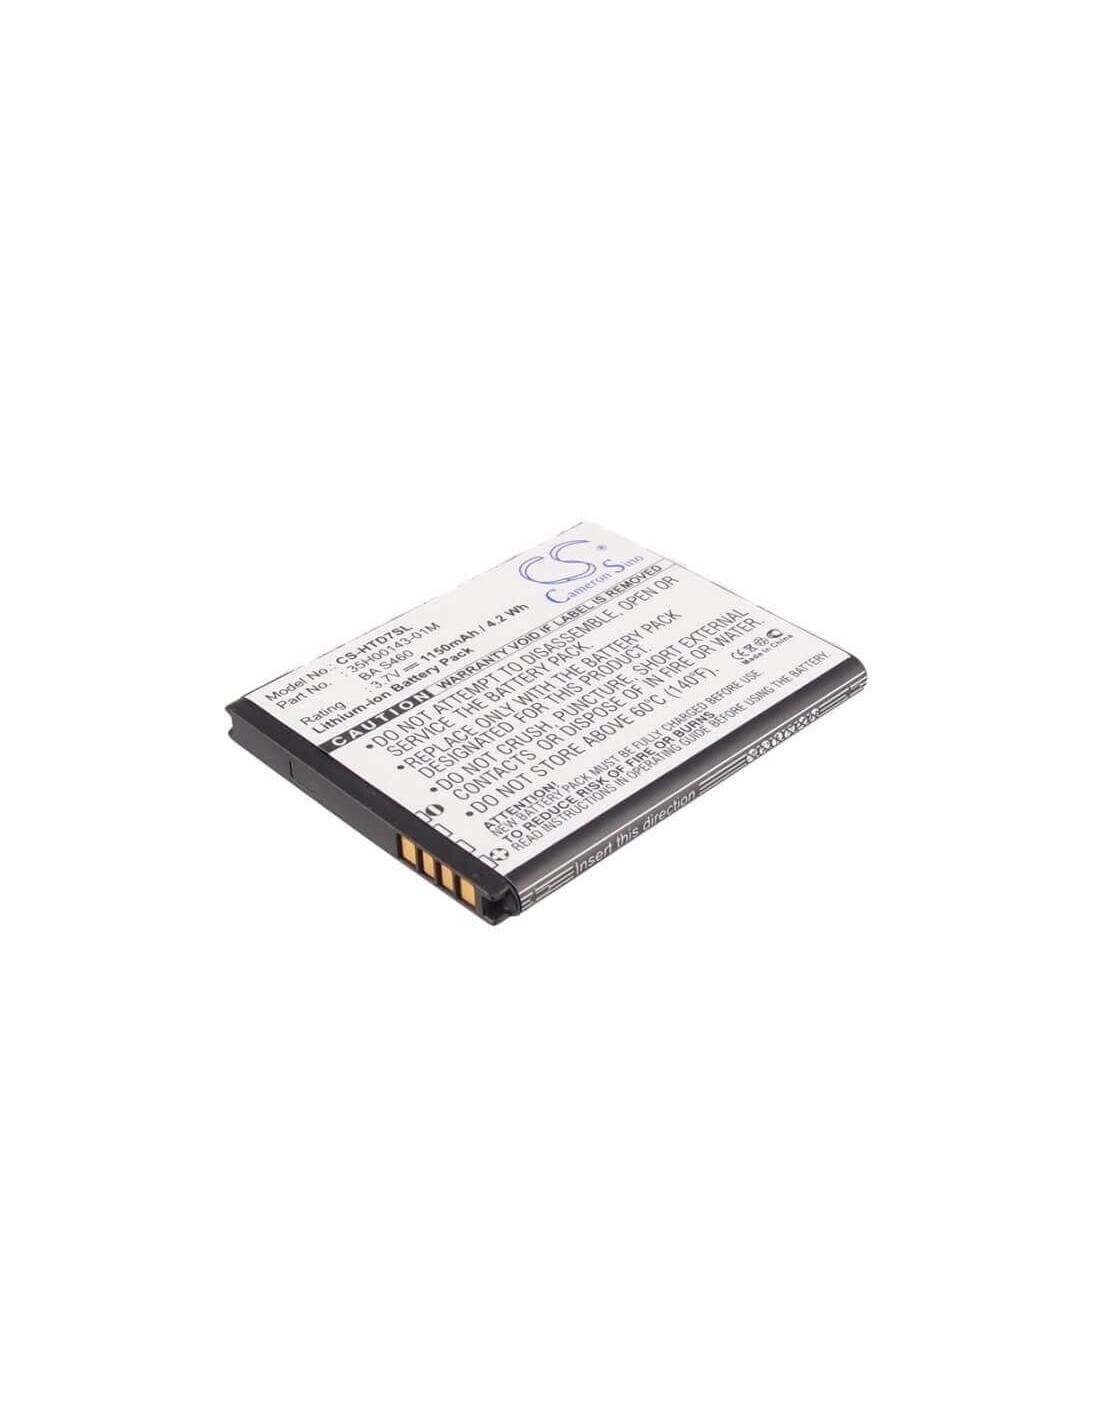 Battery for HTC HD7, T9292, HD3 3.7V, 1150mAh - 4.26Wh